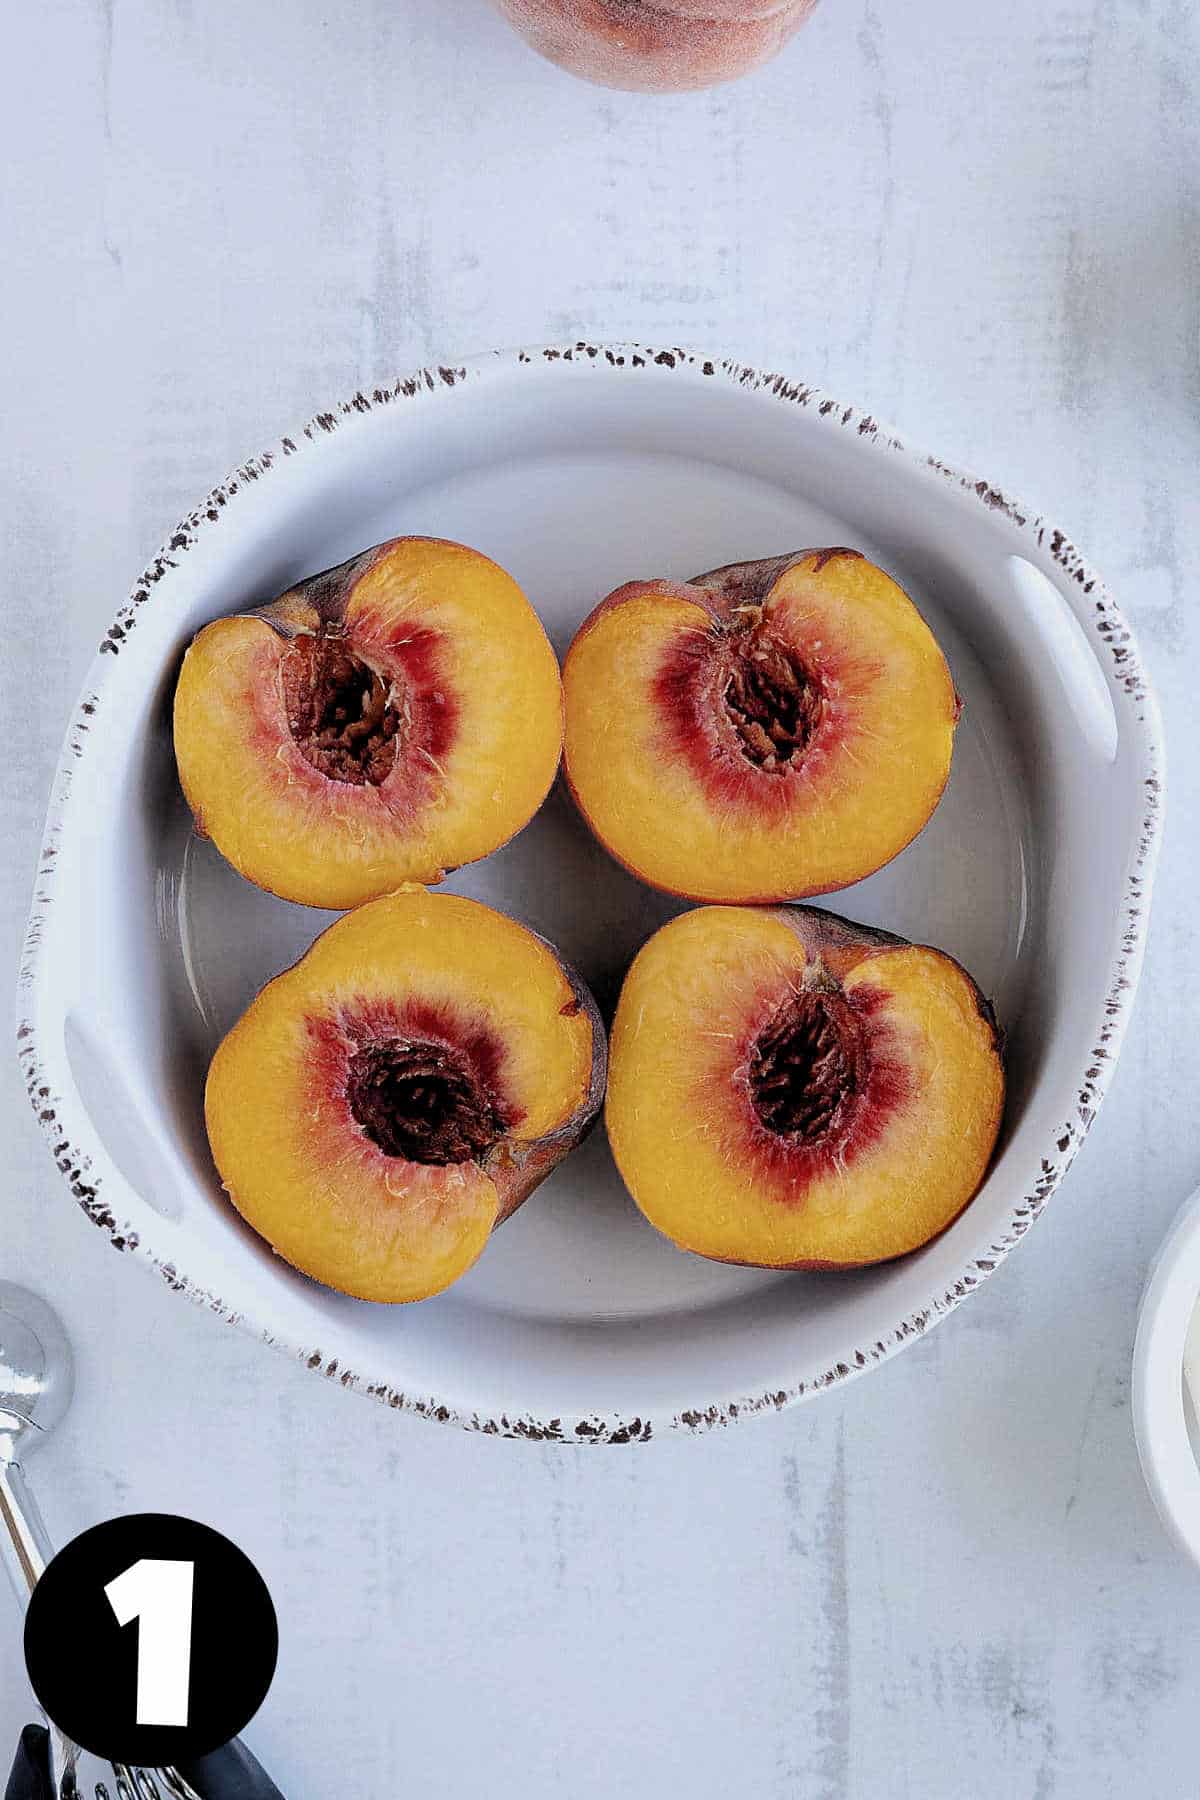 Peaches cut in half in a baking dish.